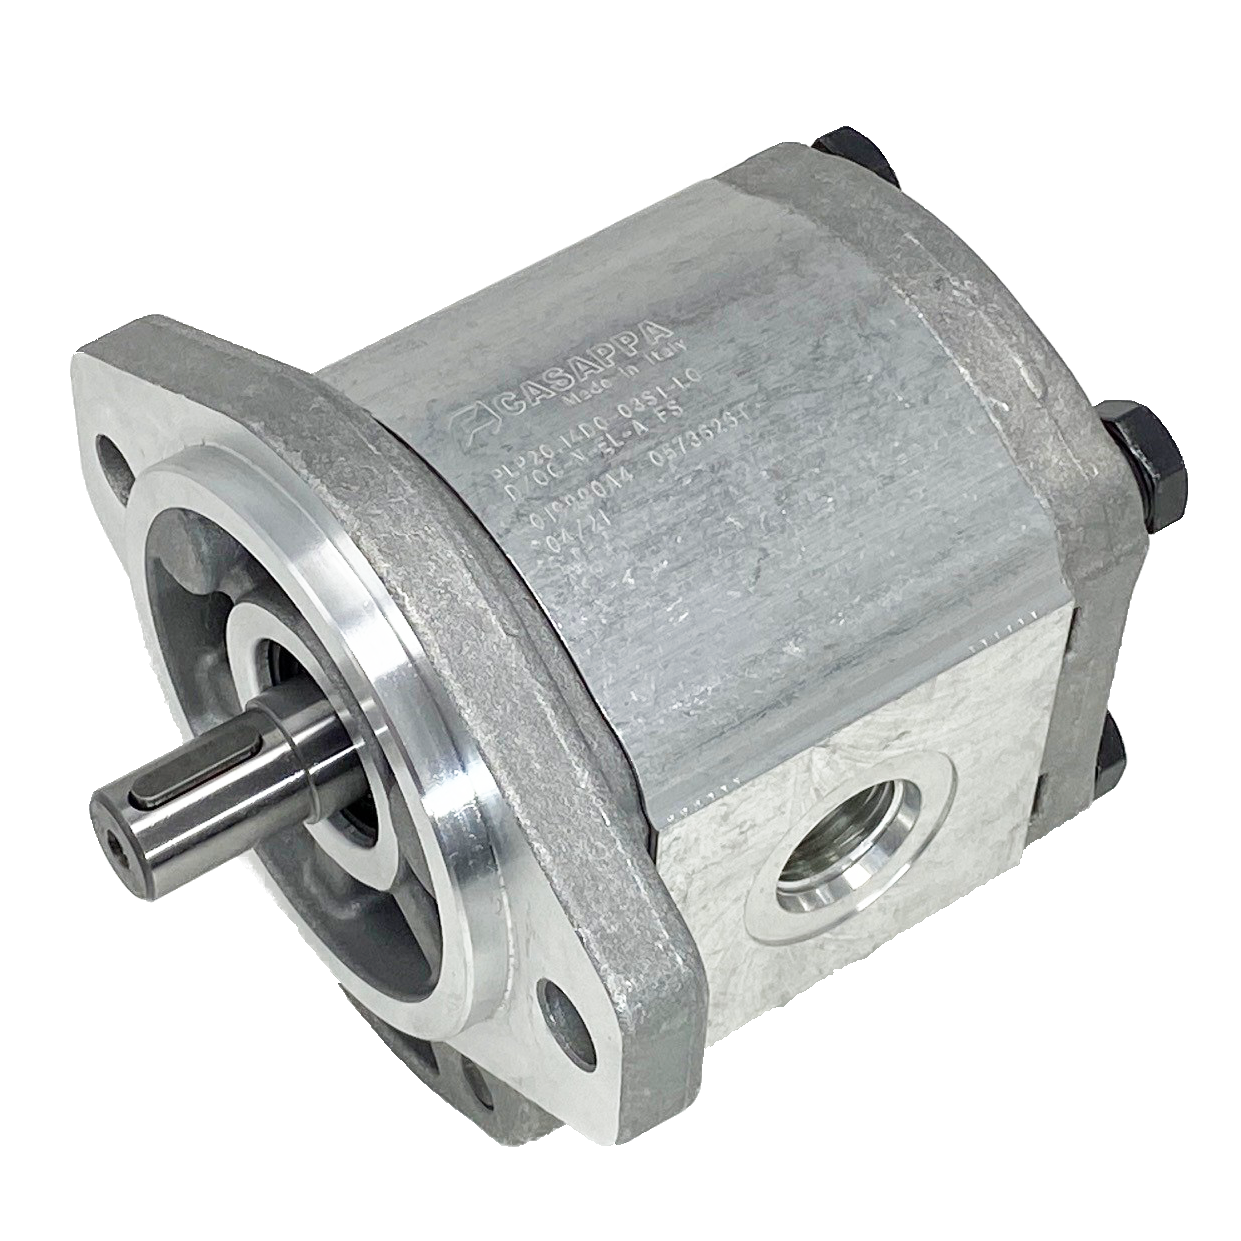 PLM20.16B0-31S1-LOC/OD-N-EL : Casappa Polaris Gear Motor, 16.85cc, 3625psi Rated, 3000RPM, Reversible Interior Drain, 5/8" Bore x 5/32" Key Shaft, SAE A 2-Bolt Flange, 0.625 (5/8") #10 SAE Inlet, 0.75 (3/4") #12 SAE Outlet, Aluminum Body & Flange